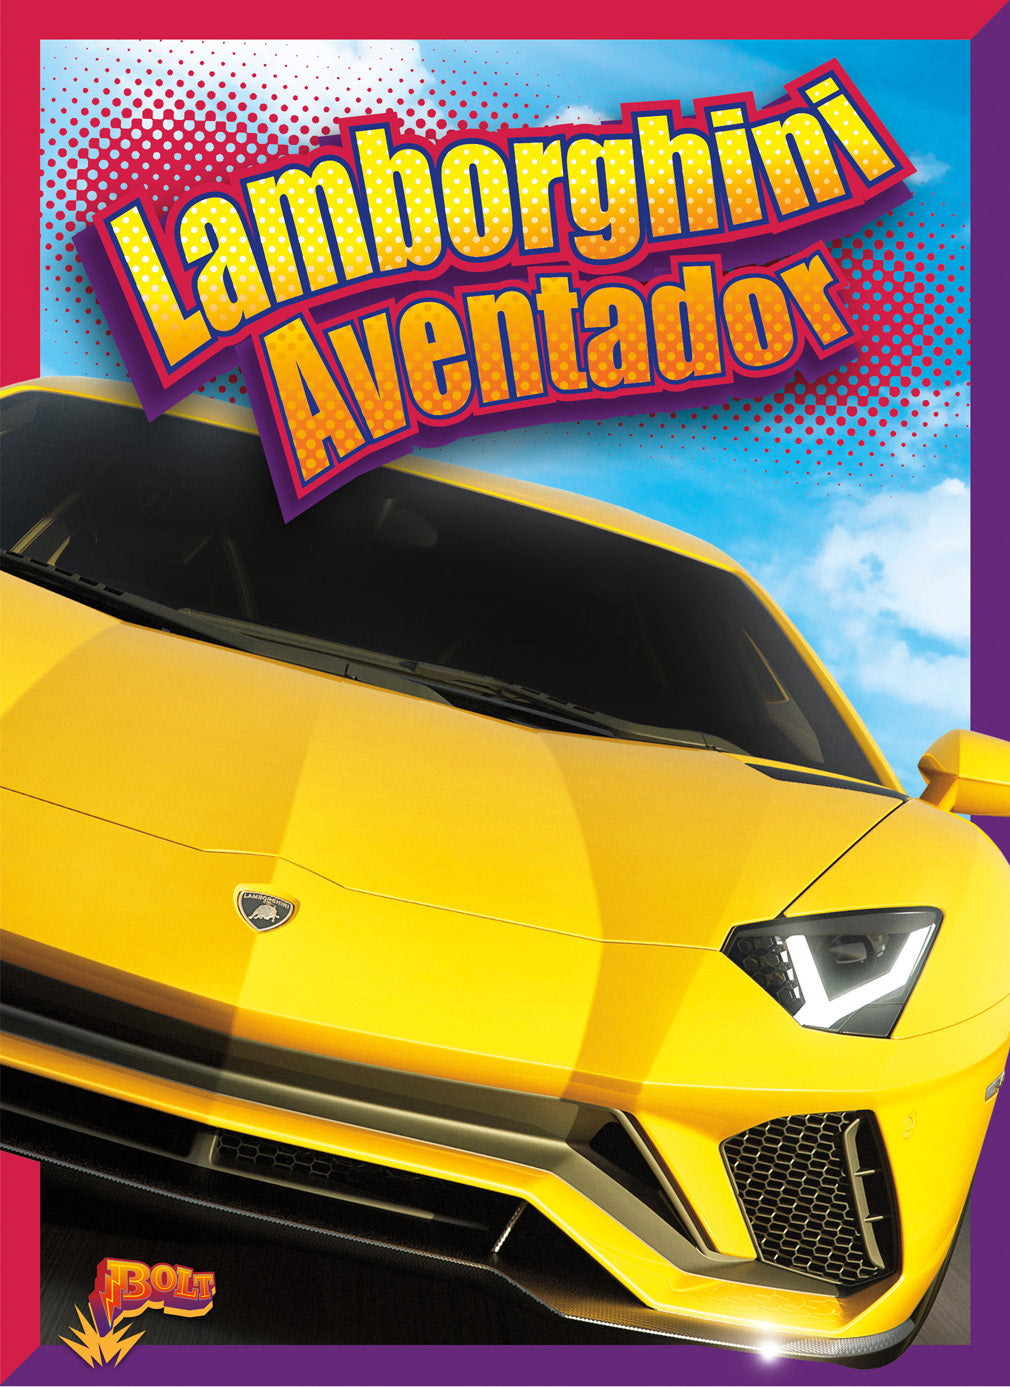 Epic Cars: Lamborghini Aventador